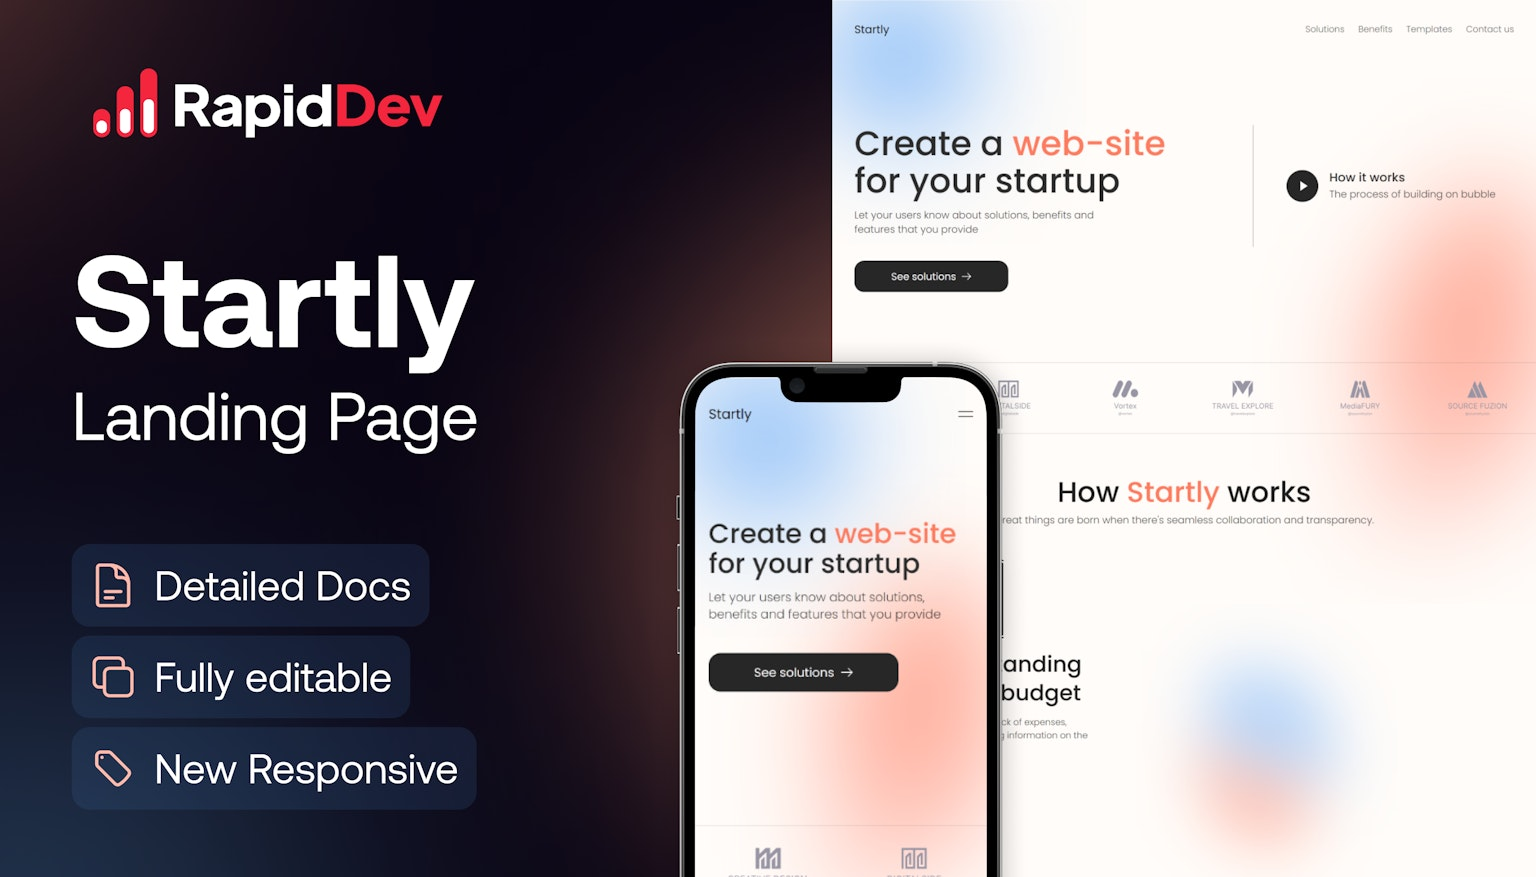 7. Startly - Startup Landing Page